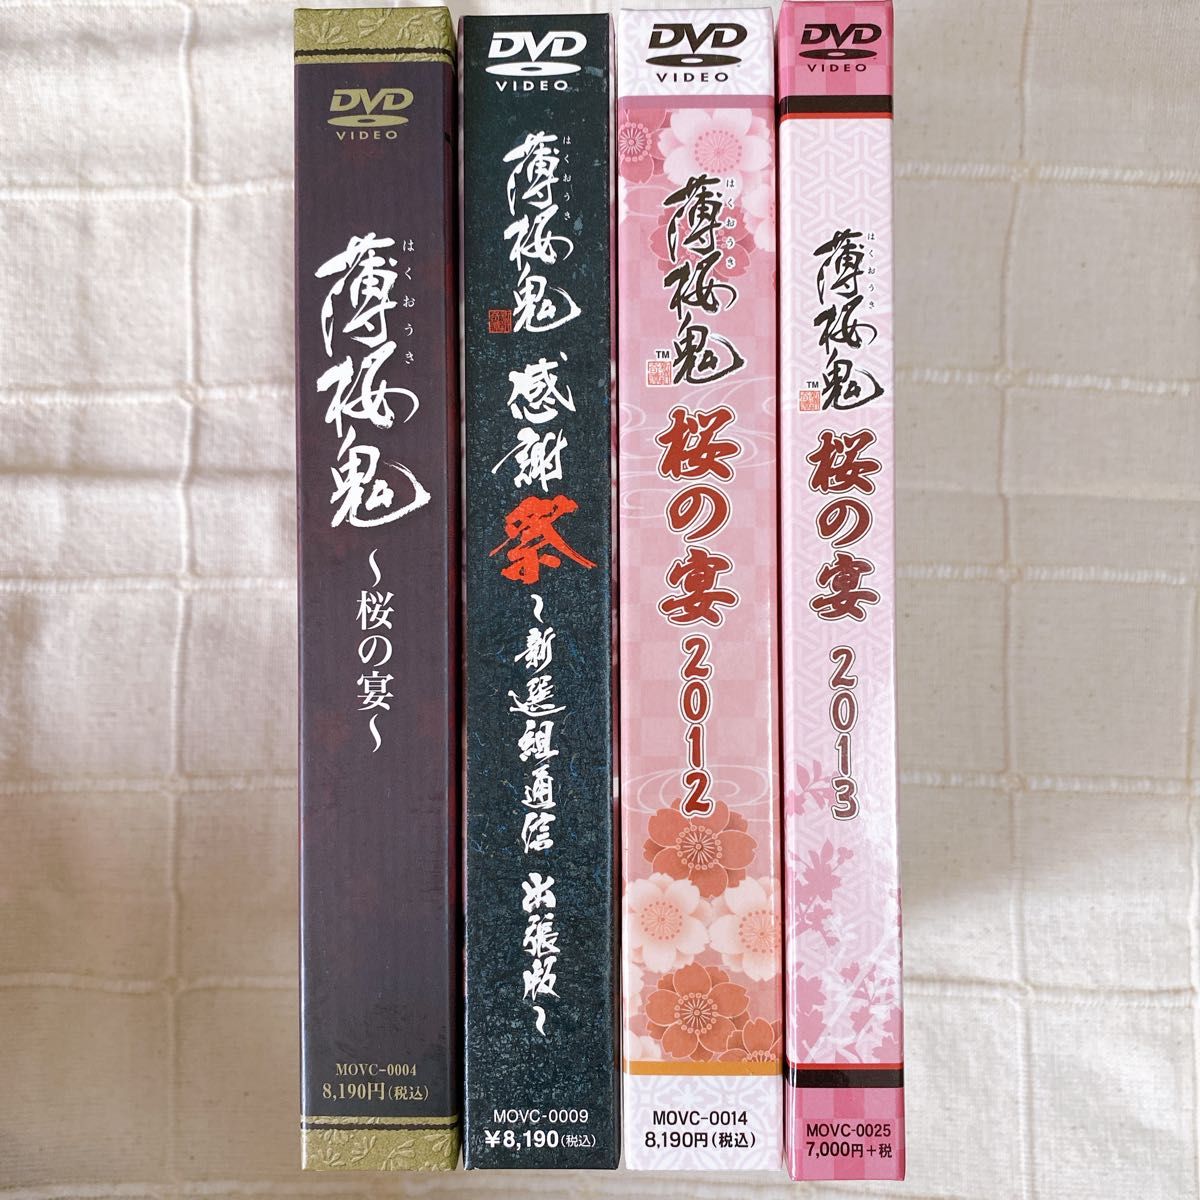 薄桜鬼 桜の宴 新選組通信出張版 DVDセット